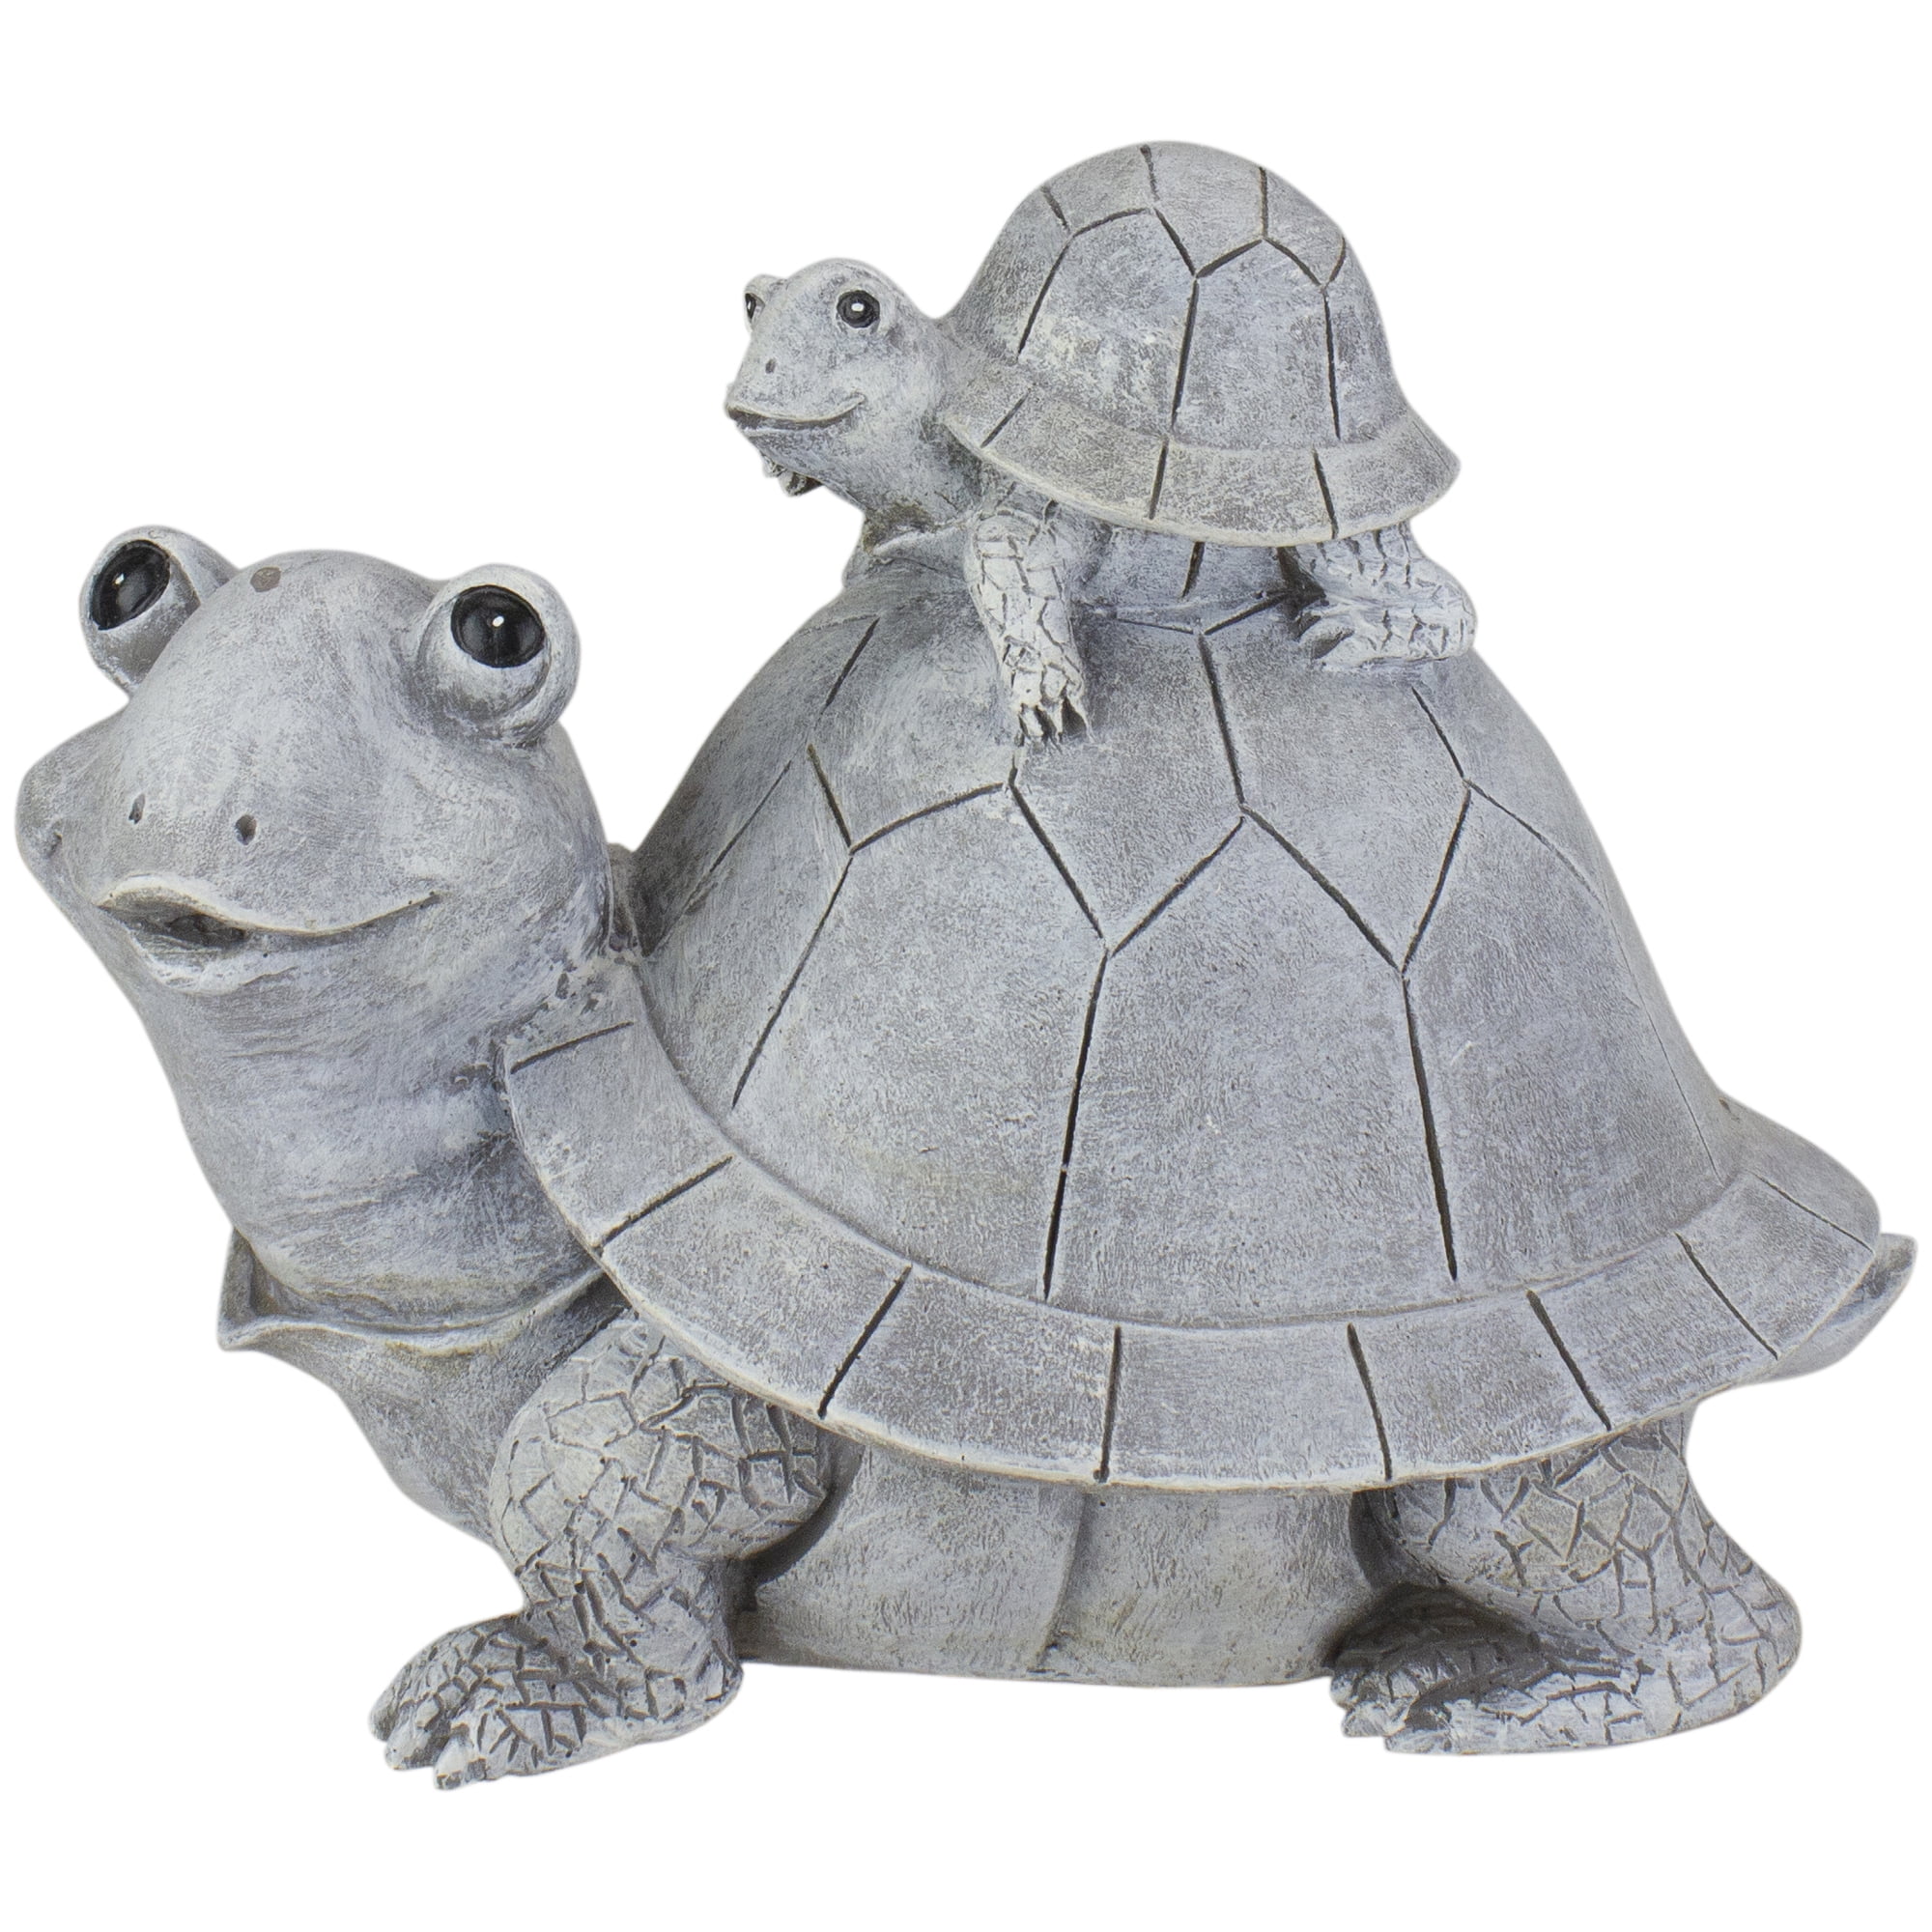 A Unique Piece Of Decor For The Interior Fantasy Creature Animal Amazing Turtle Sculpture Turtle Sculpture Textile Turtle Sculpture